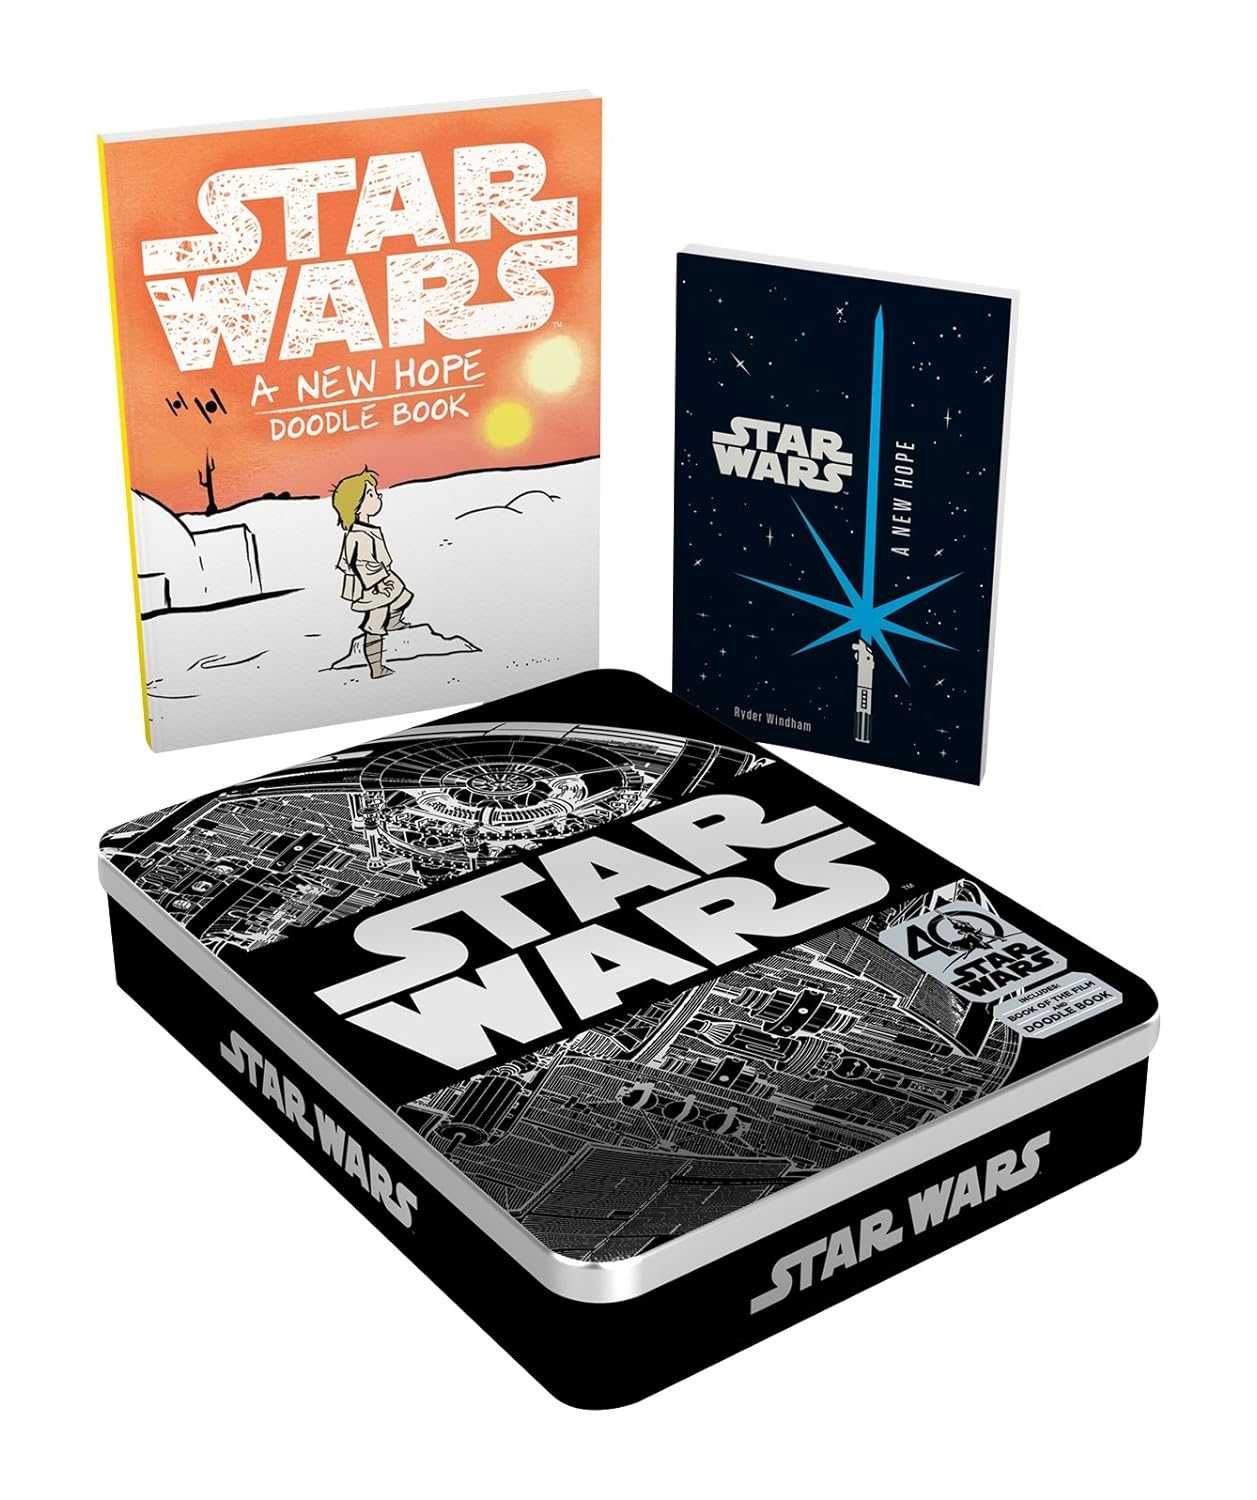 Cutie metalica Star Wars - A new hope book + doodlebook in engleza